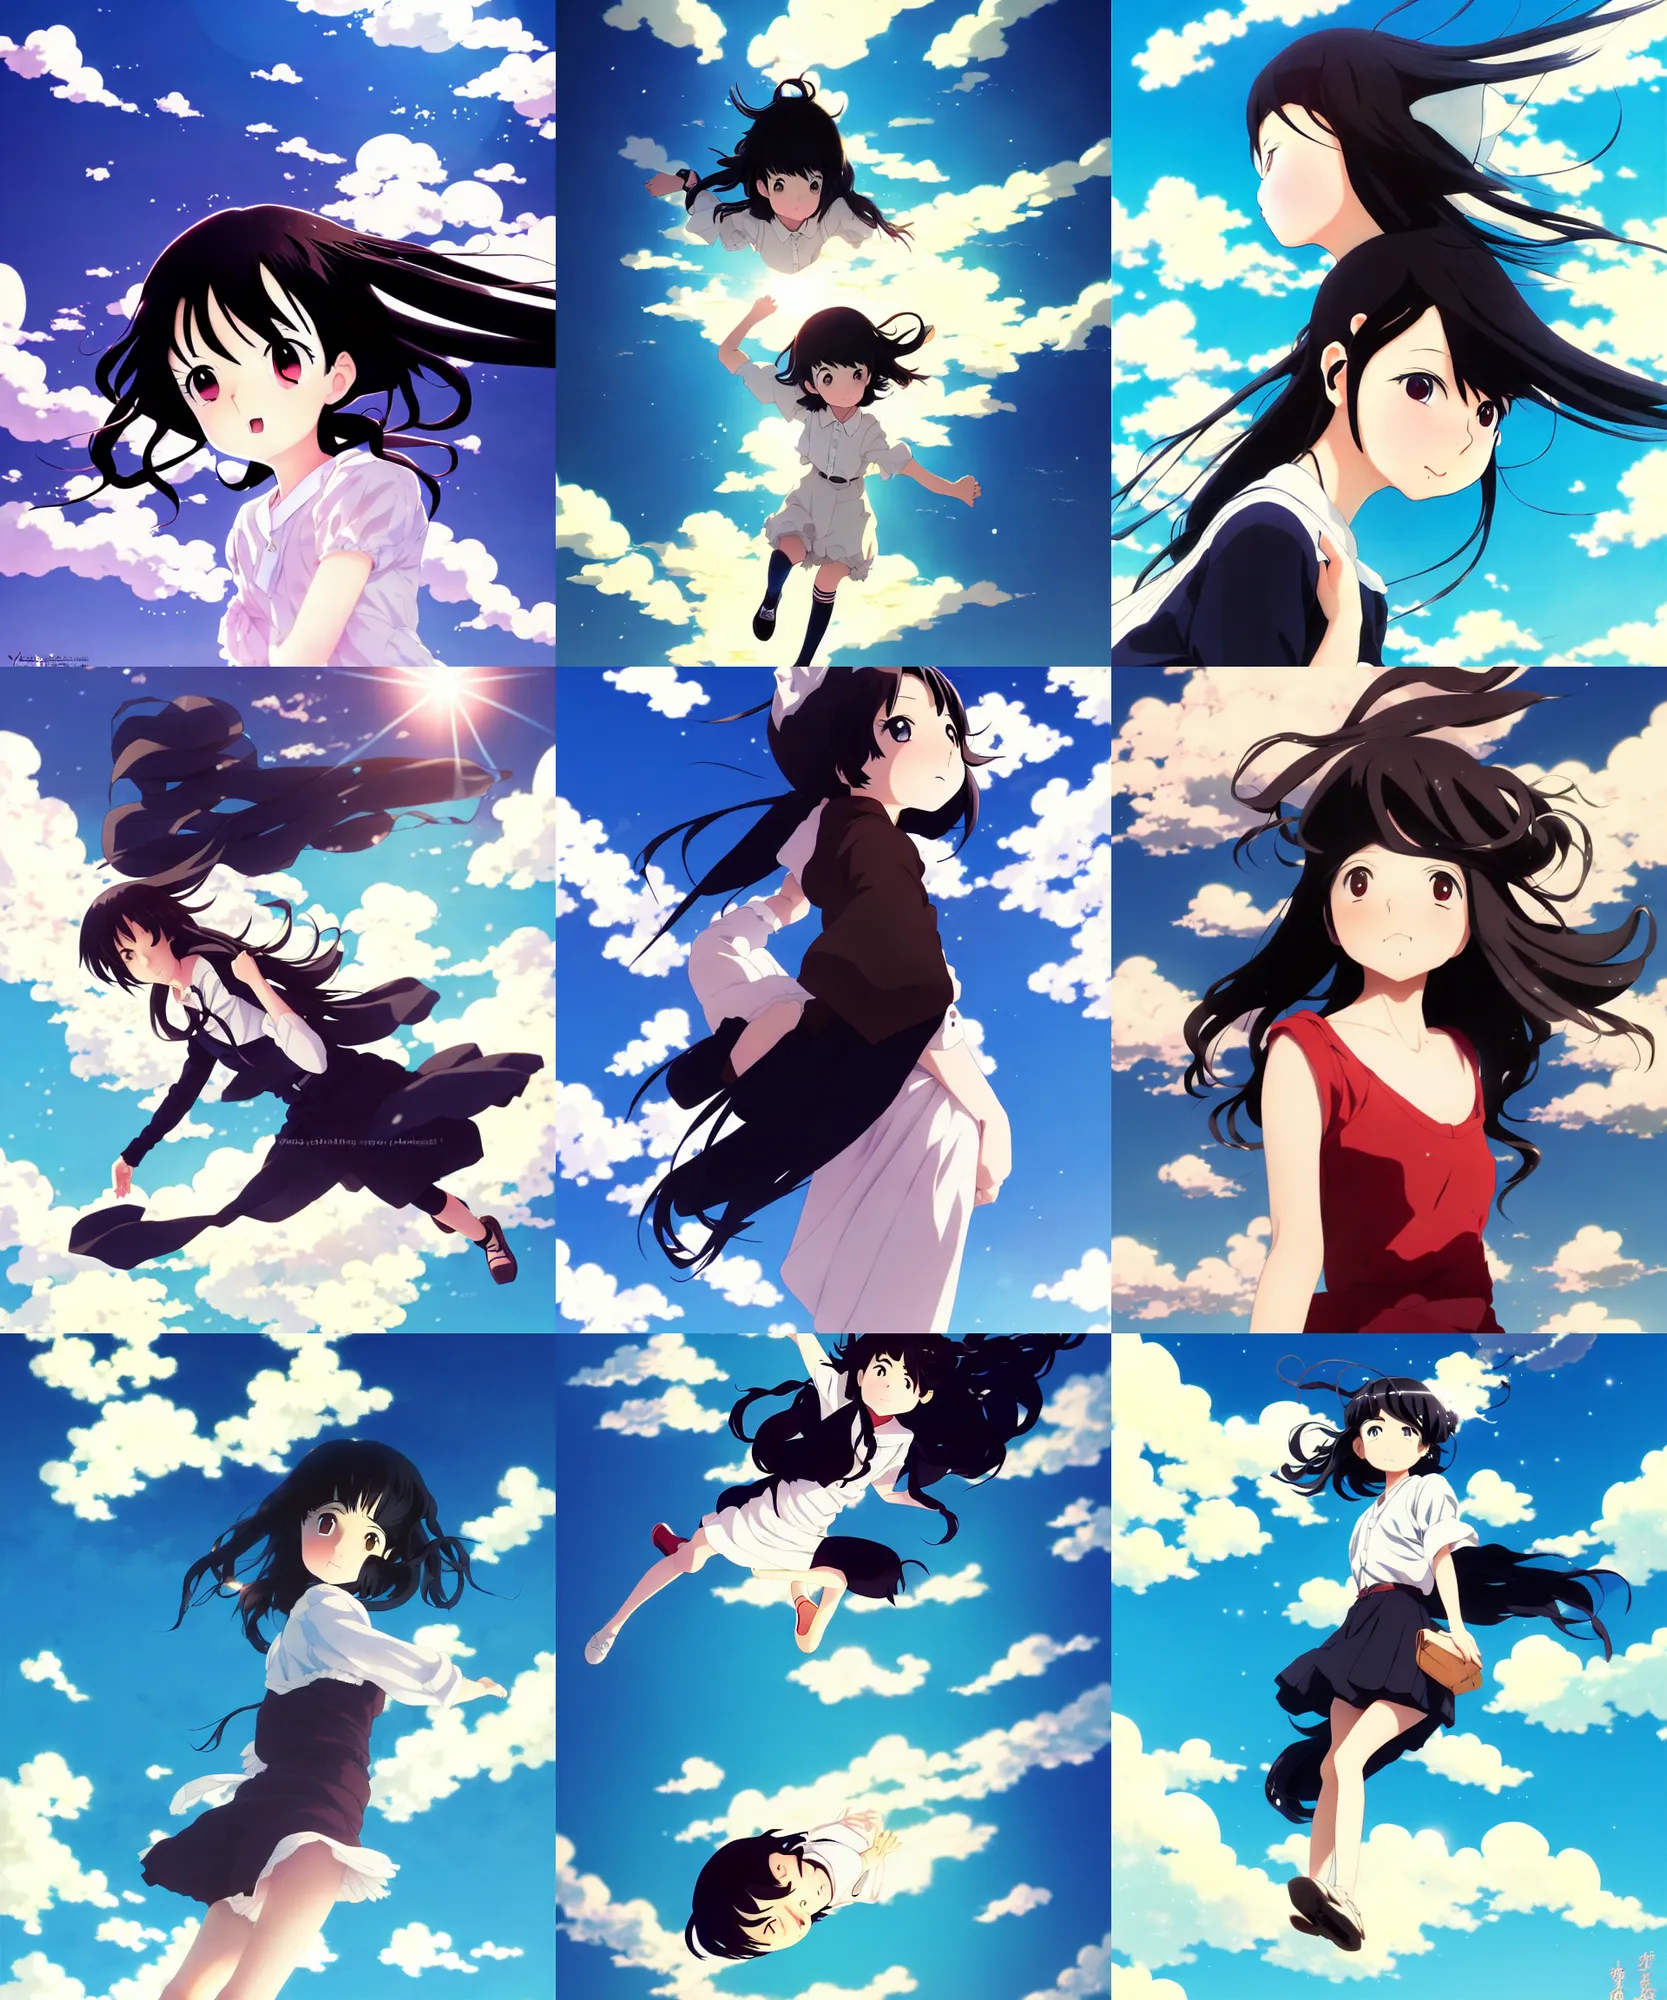 HD wallpaper: black-haired female anime character digital wallpaper, Your  Name.